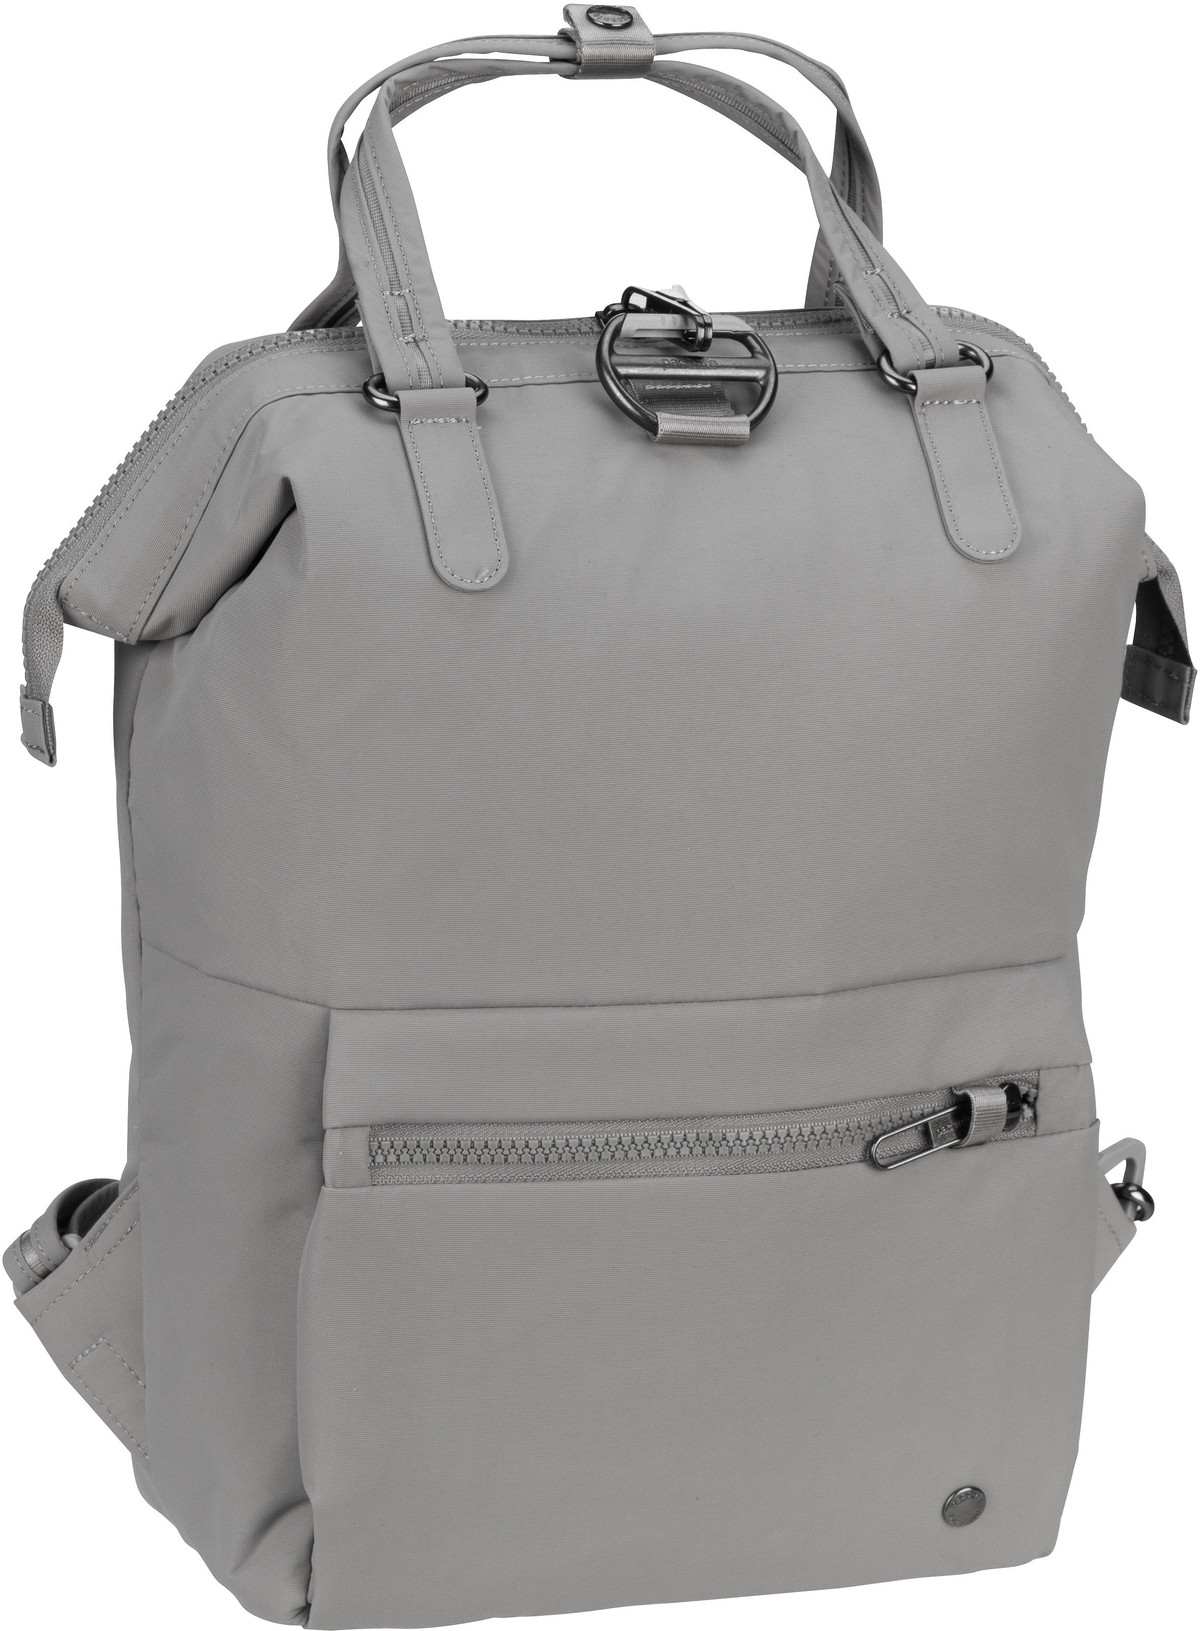 Pacsafe Pacsafe Citysafe CX Mini Backpack in Grau (11 Liter), Rucksack / Backpack